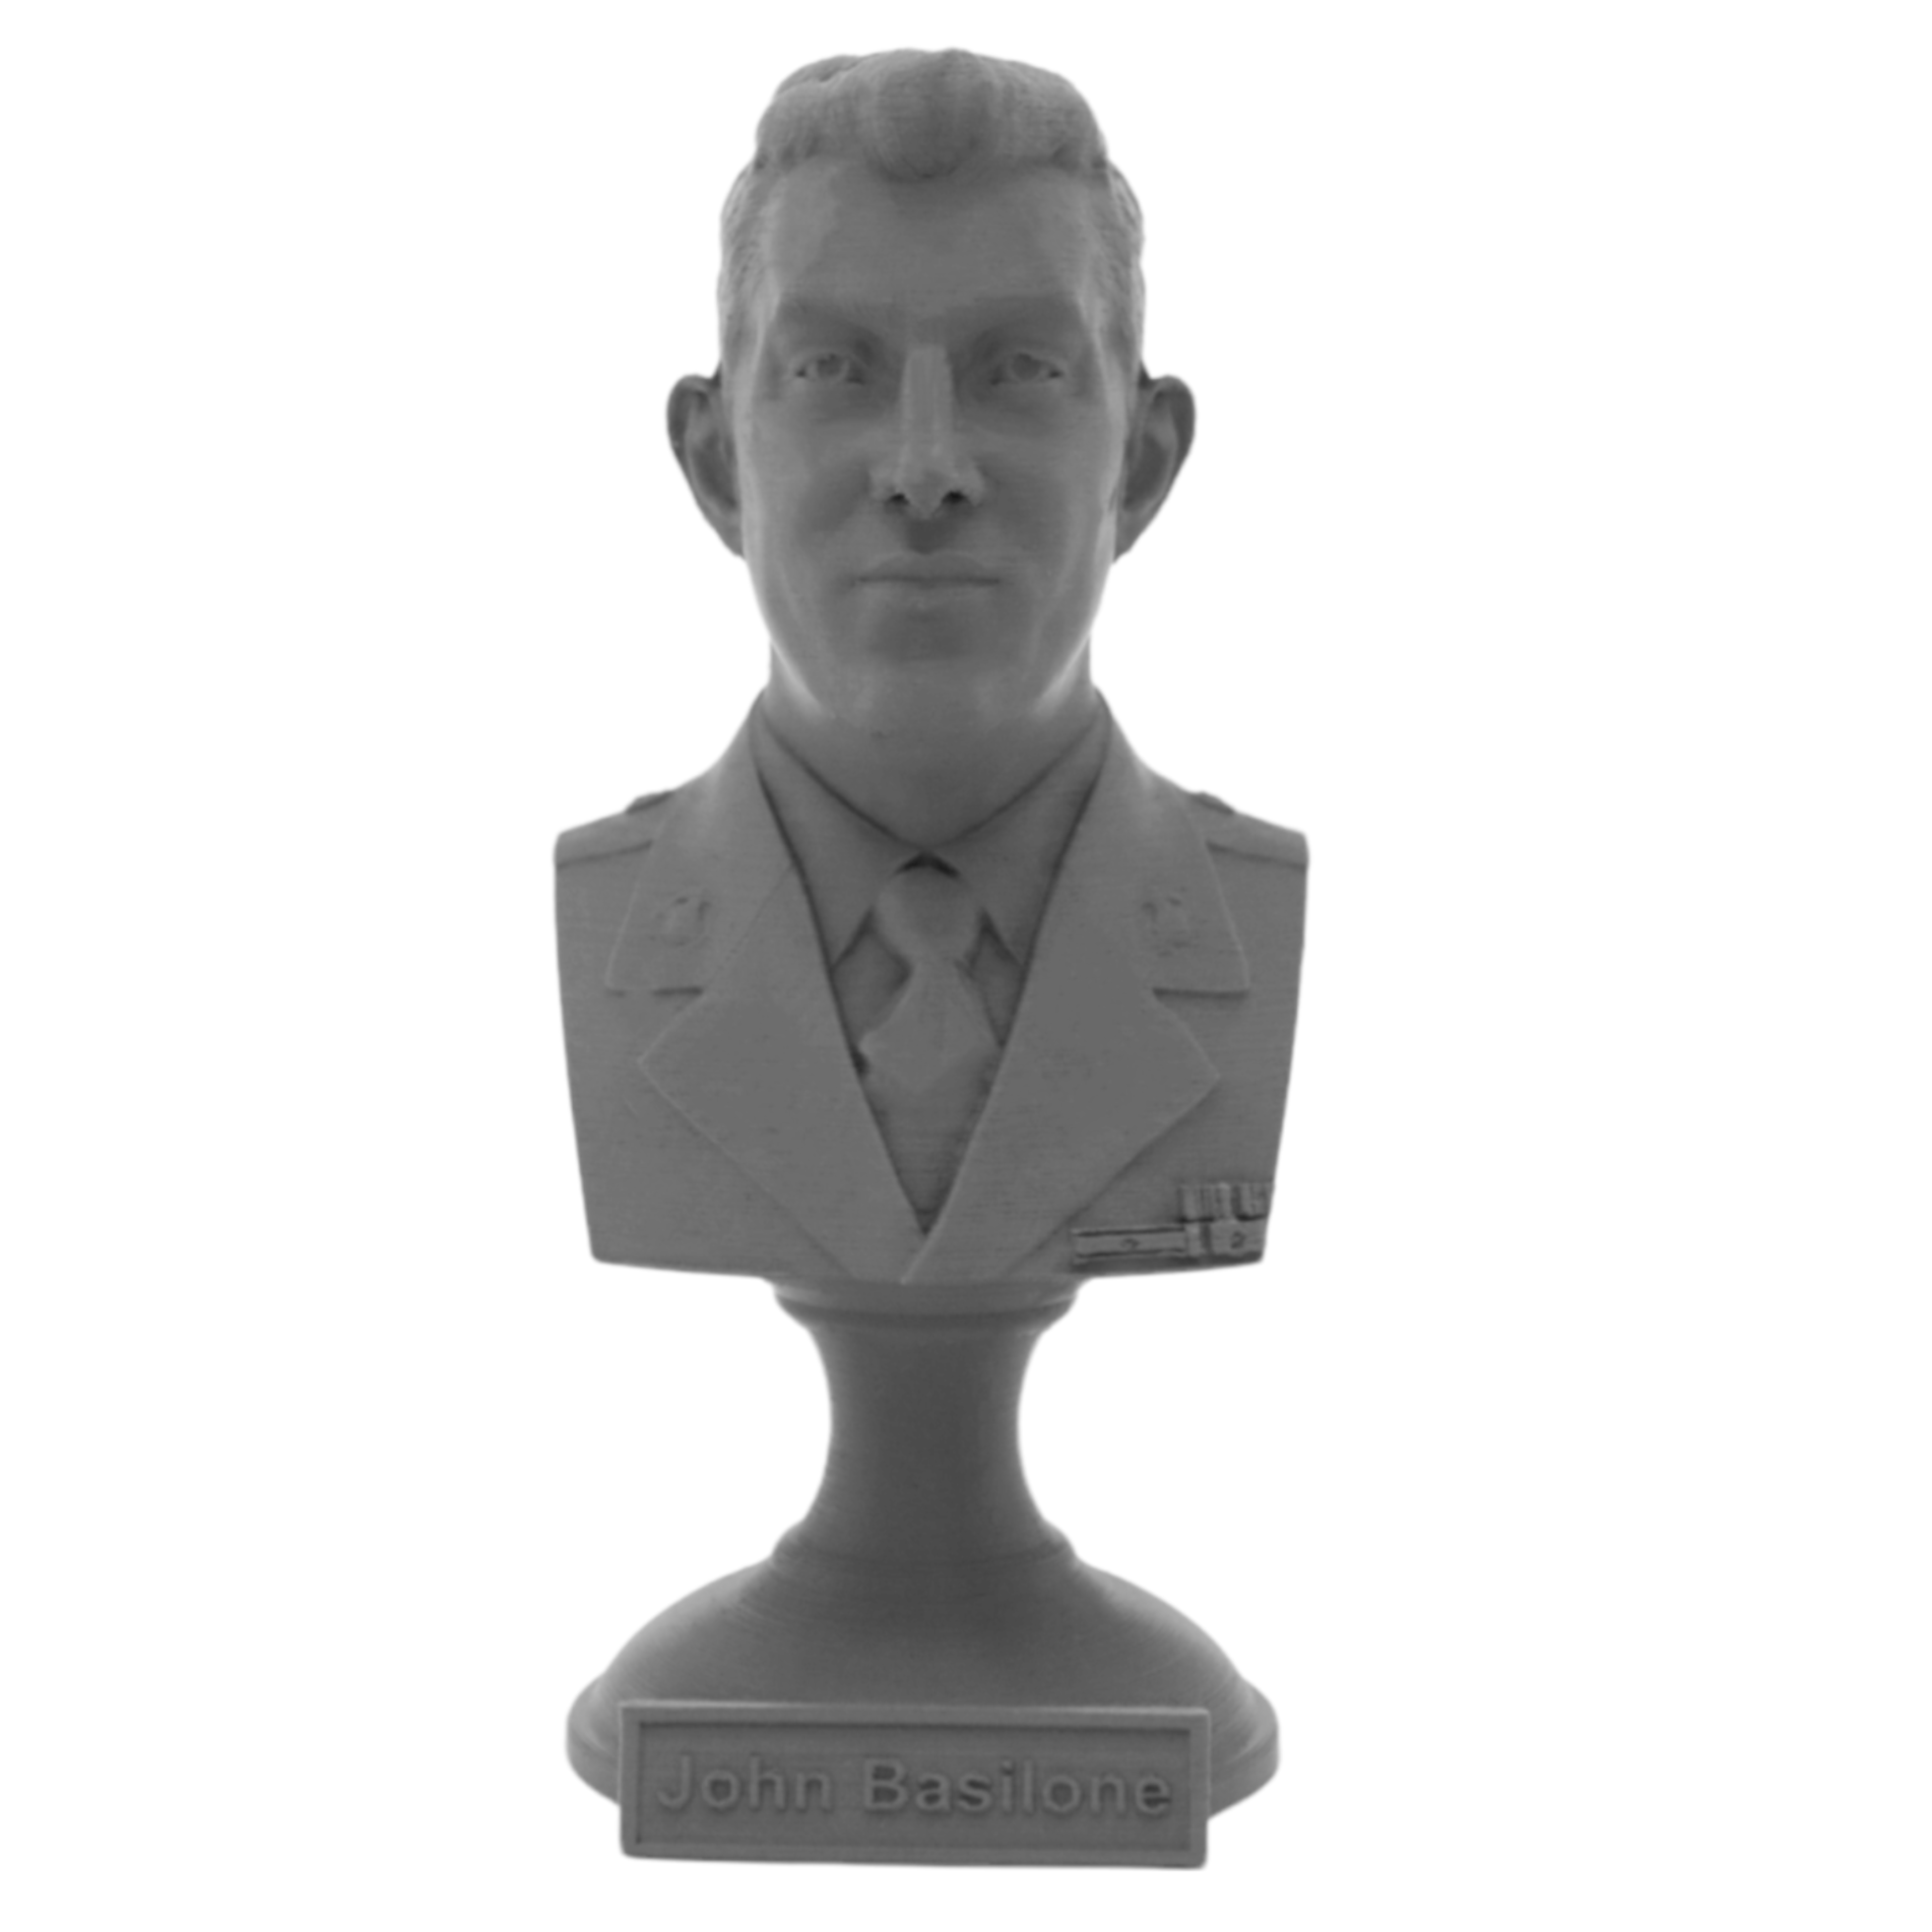 John Basilone US Marine Corps Medal of Honor Winner Sculpture Bust on Pedestal